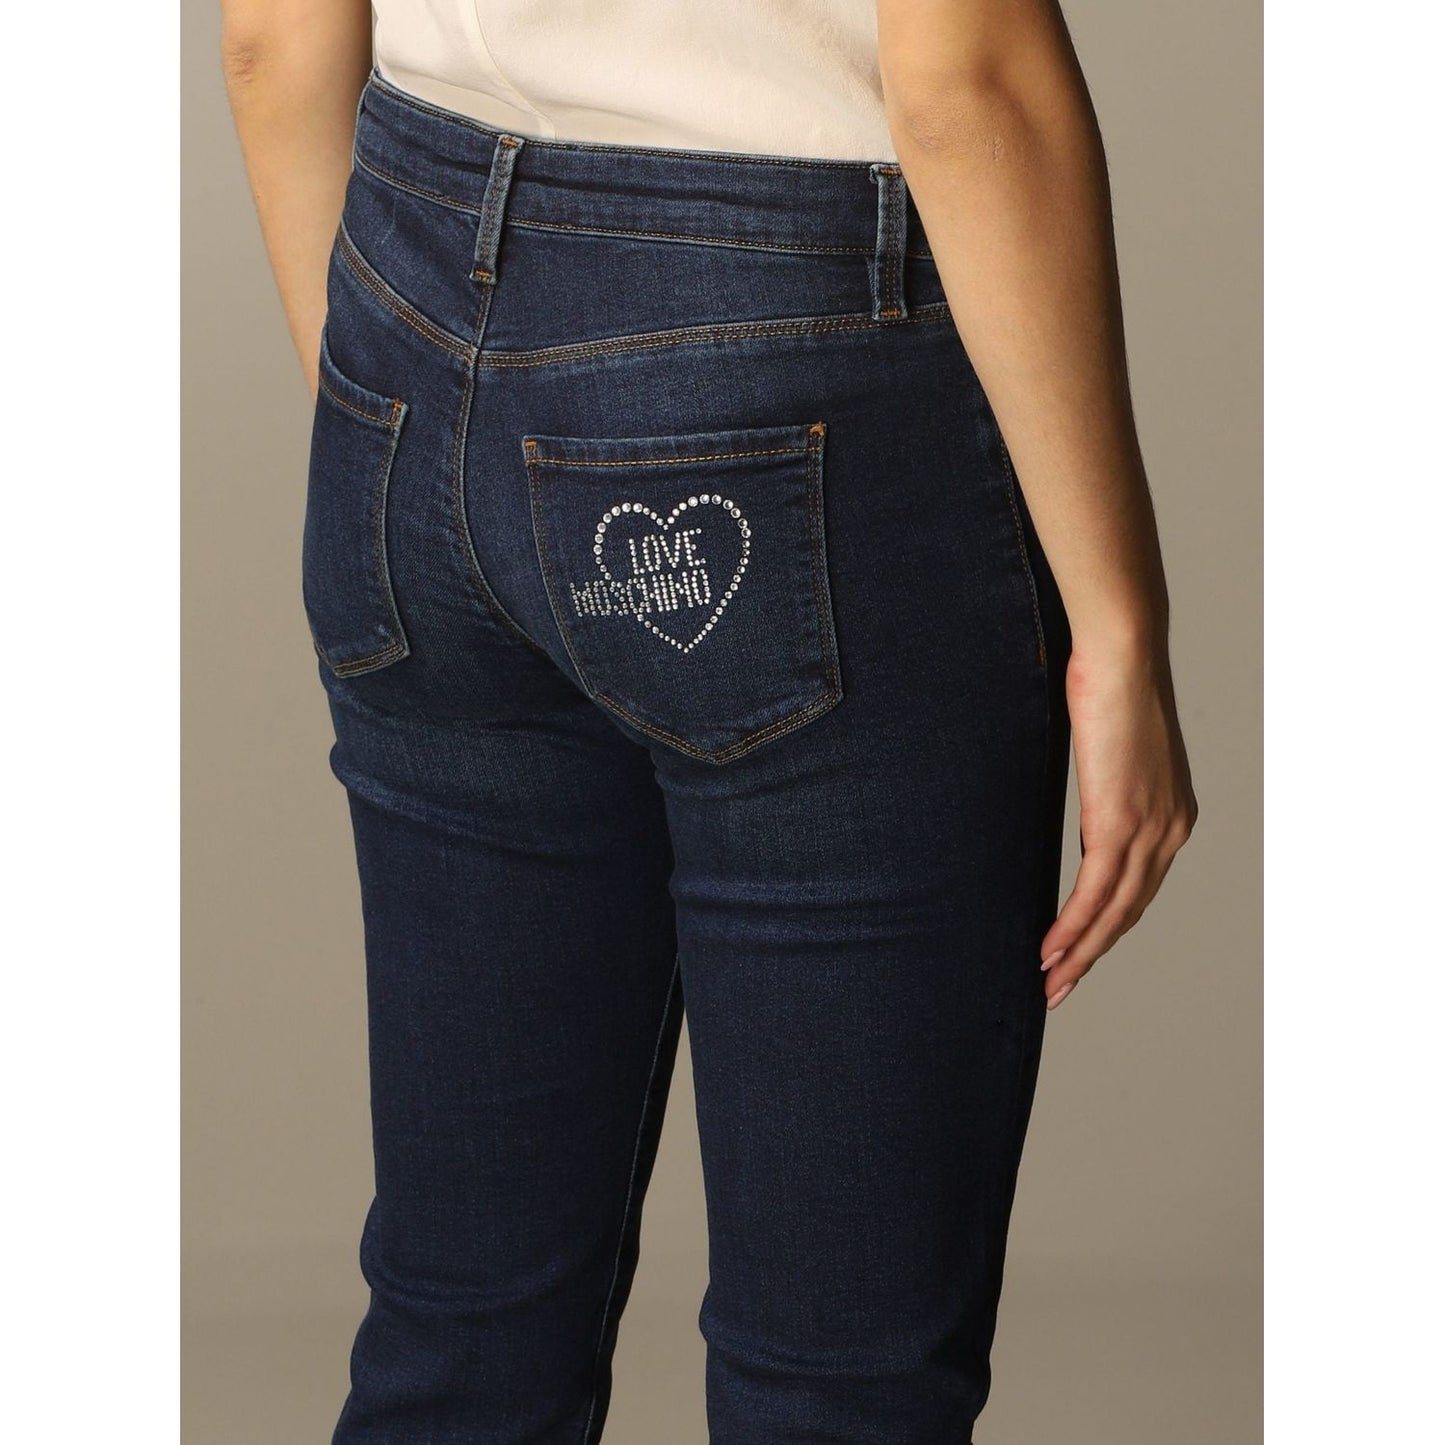 Love Moschino Chic Rhinestone Back Logo Jeans chic-rhinestone-back-logo-jeans